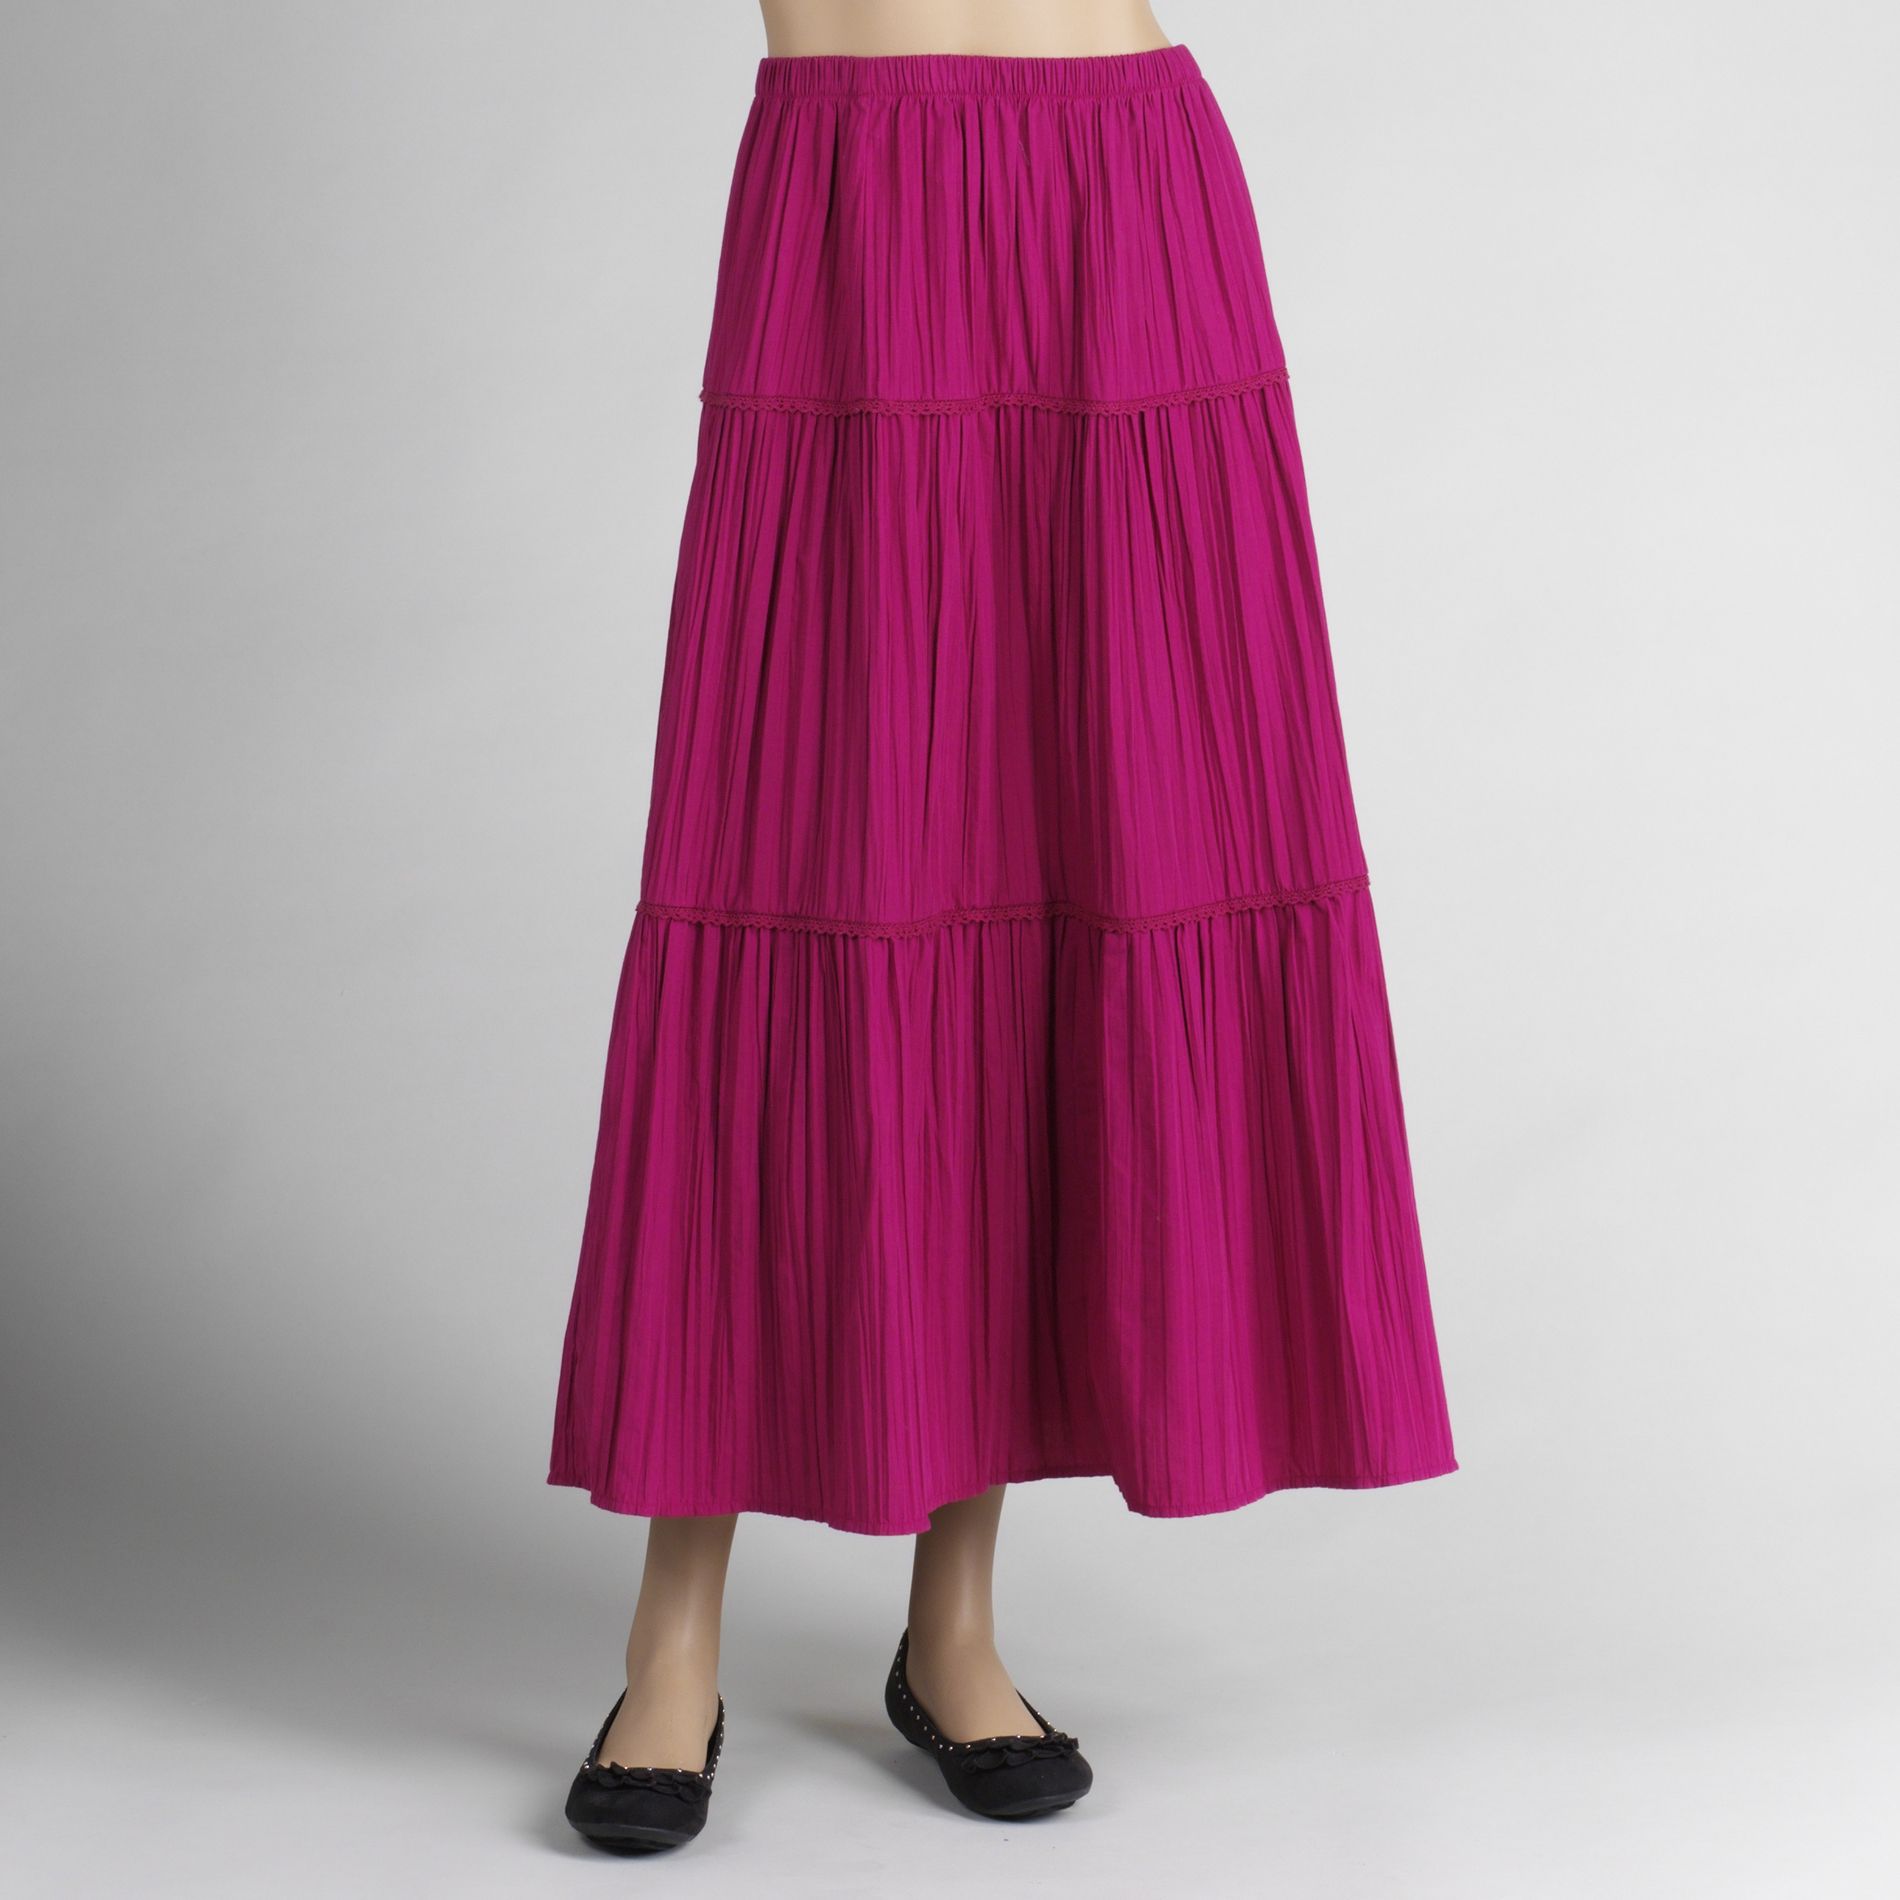 Basic Editions Women's Broomstick Skirt